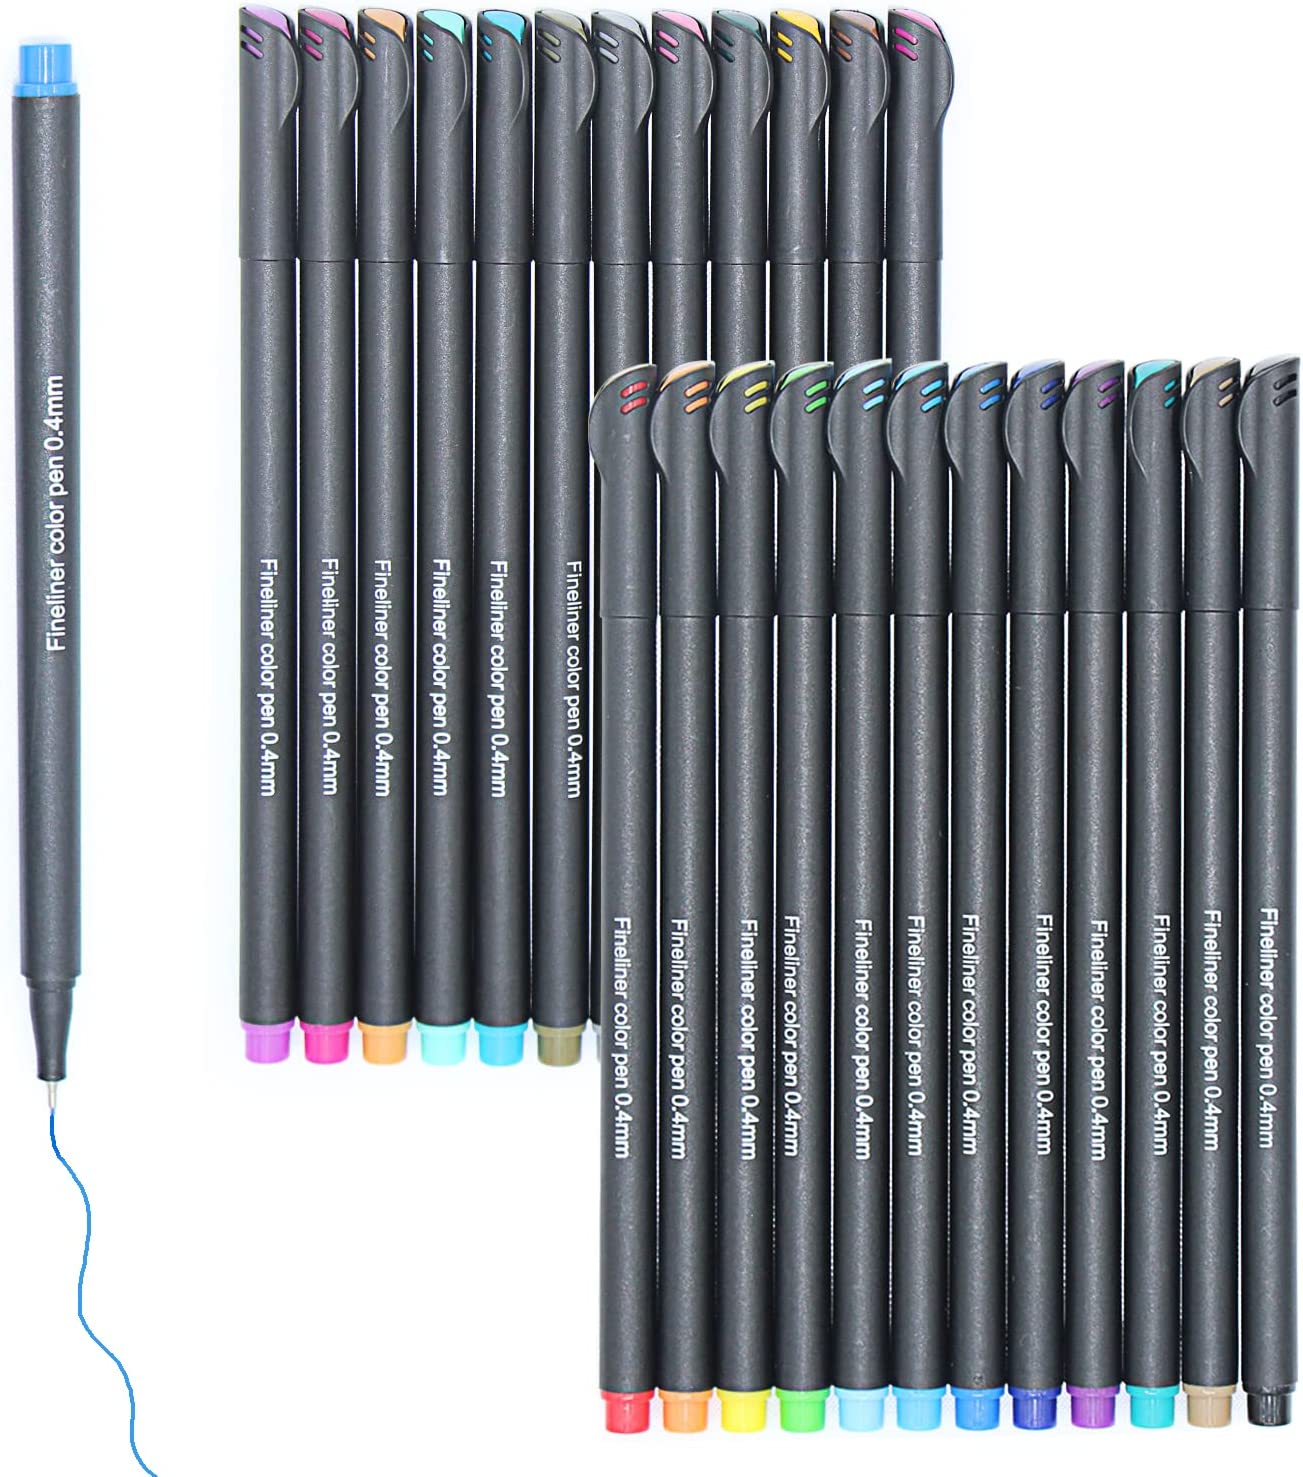 12 Colors 0.4mm Extra Fine Point Color Pen Water-based Journal Planner  Fineliner Liquid Pen